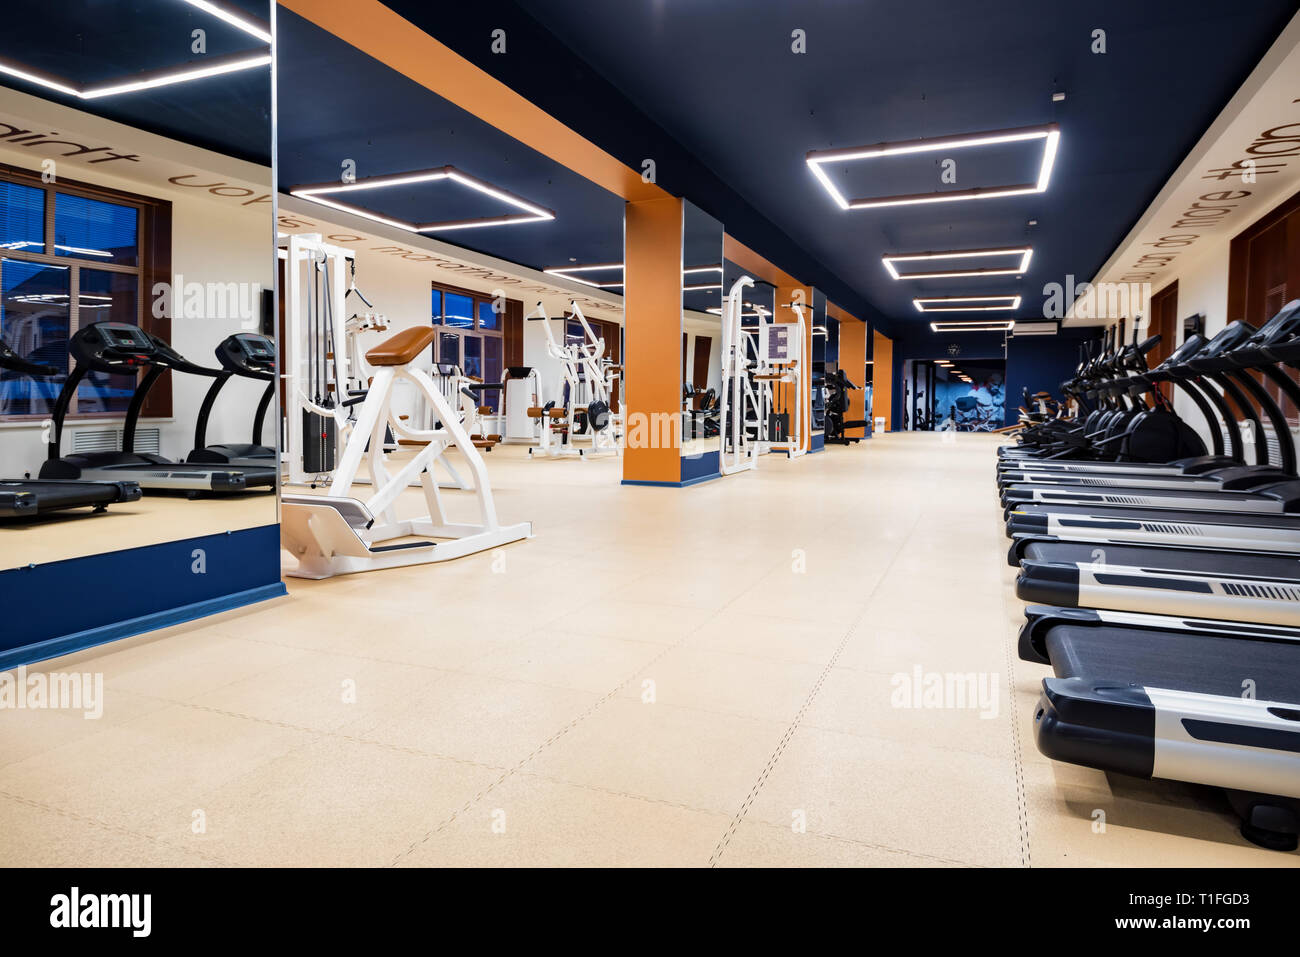 Neue Fitnessgeräte im modernen Fitnessraum Innenraum Stockfotografie - Alamy